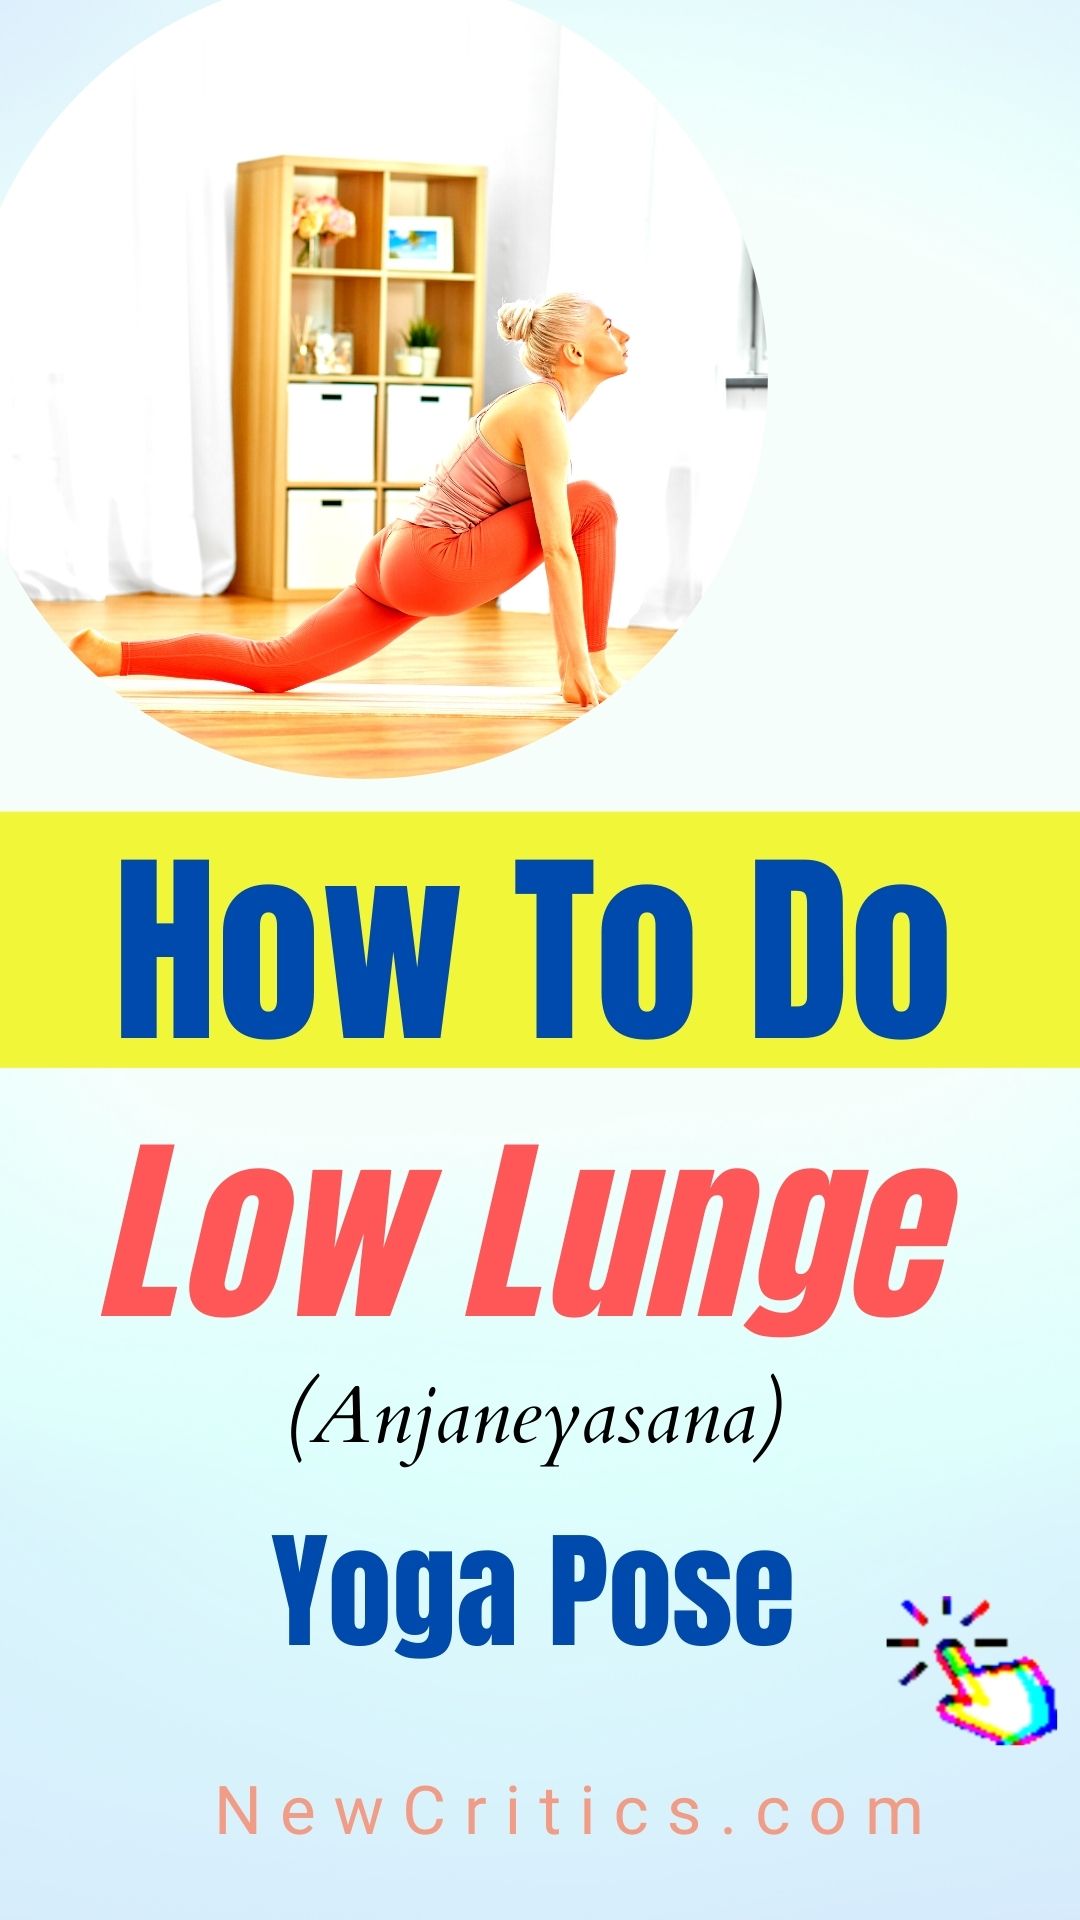 Low Lunge Yoga Pose / Canva